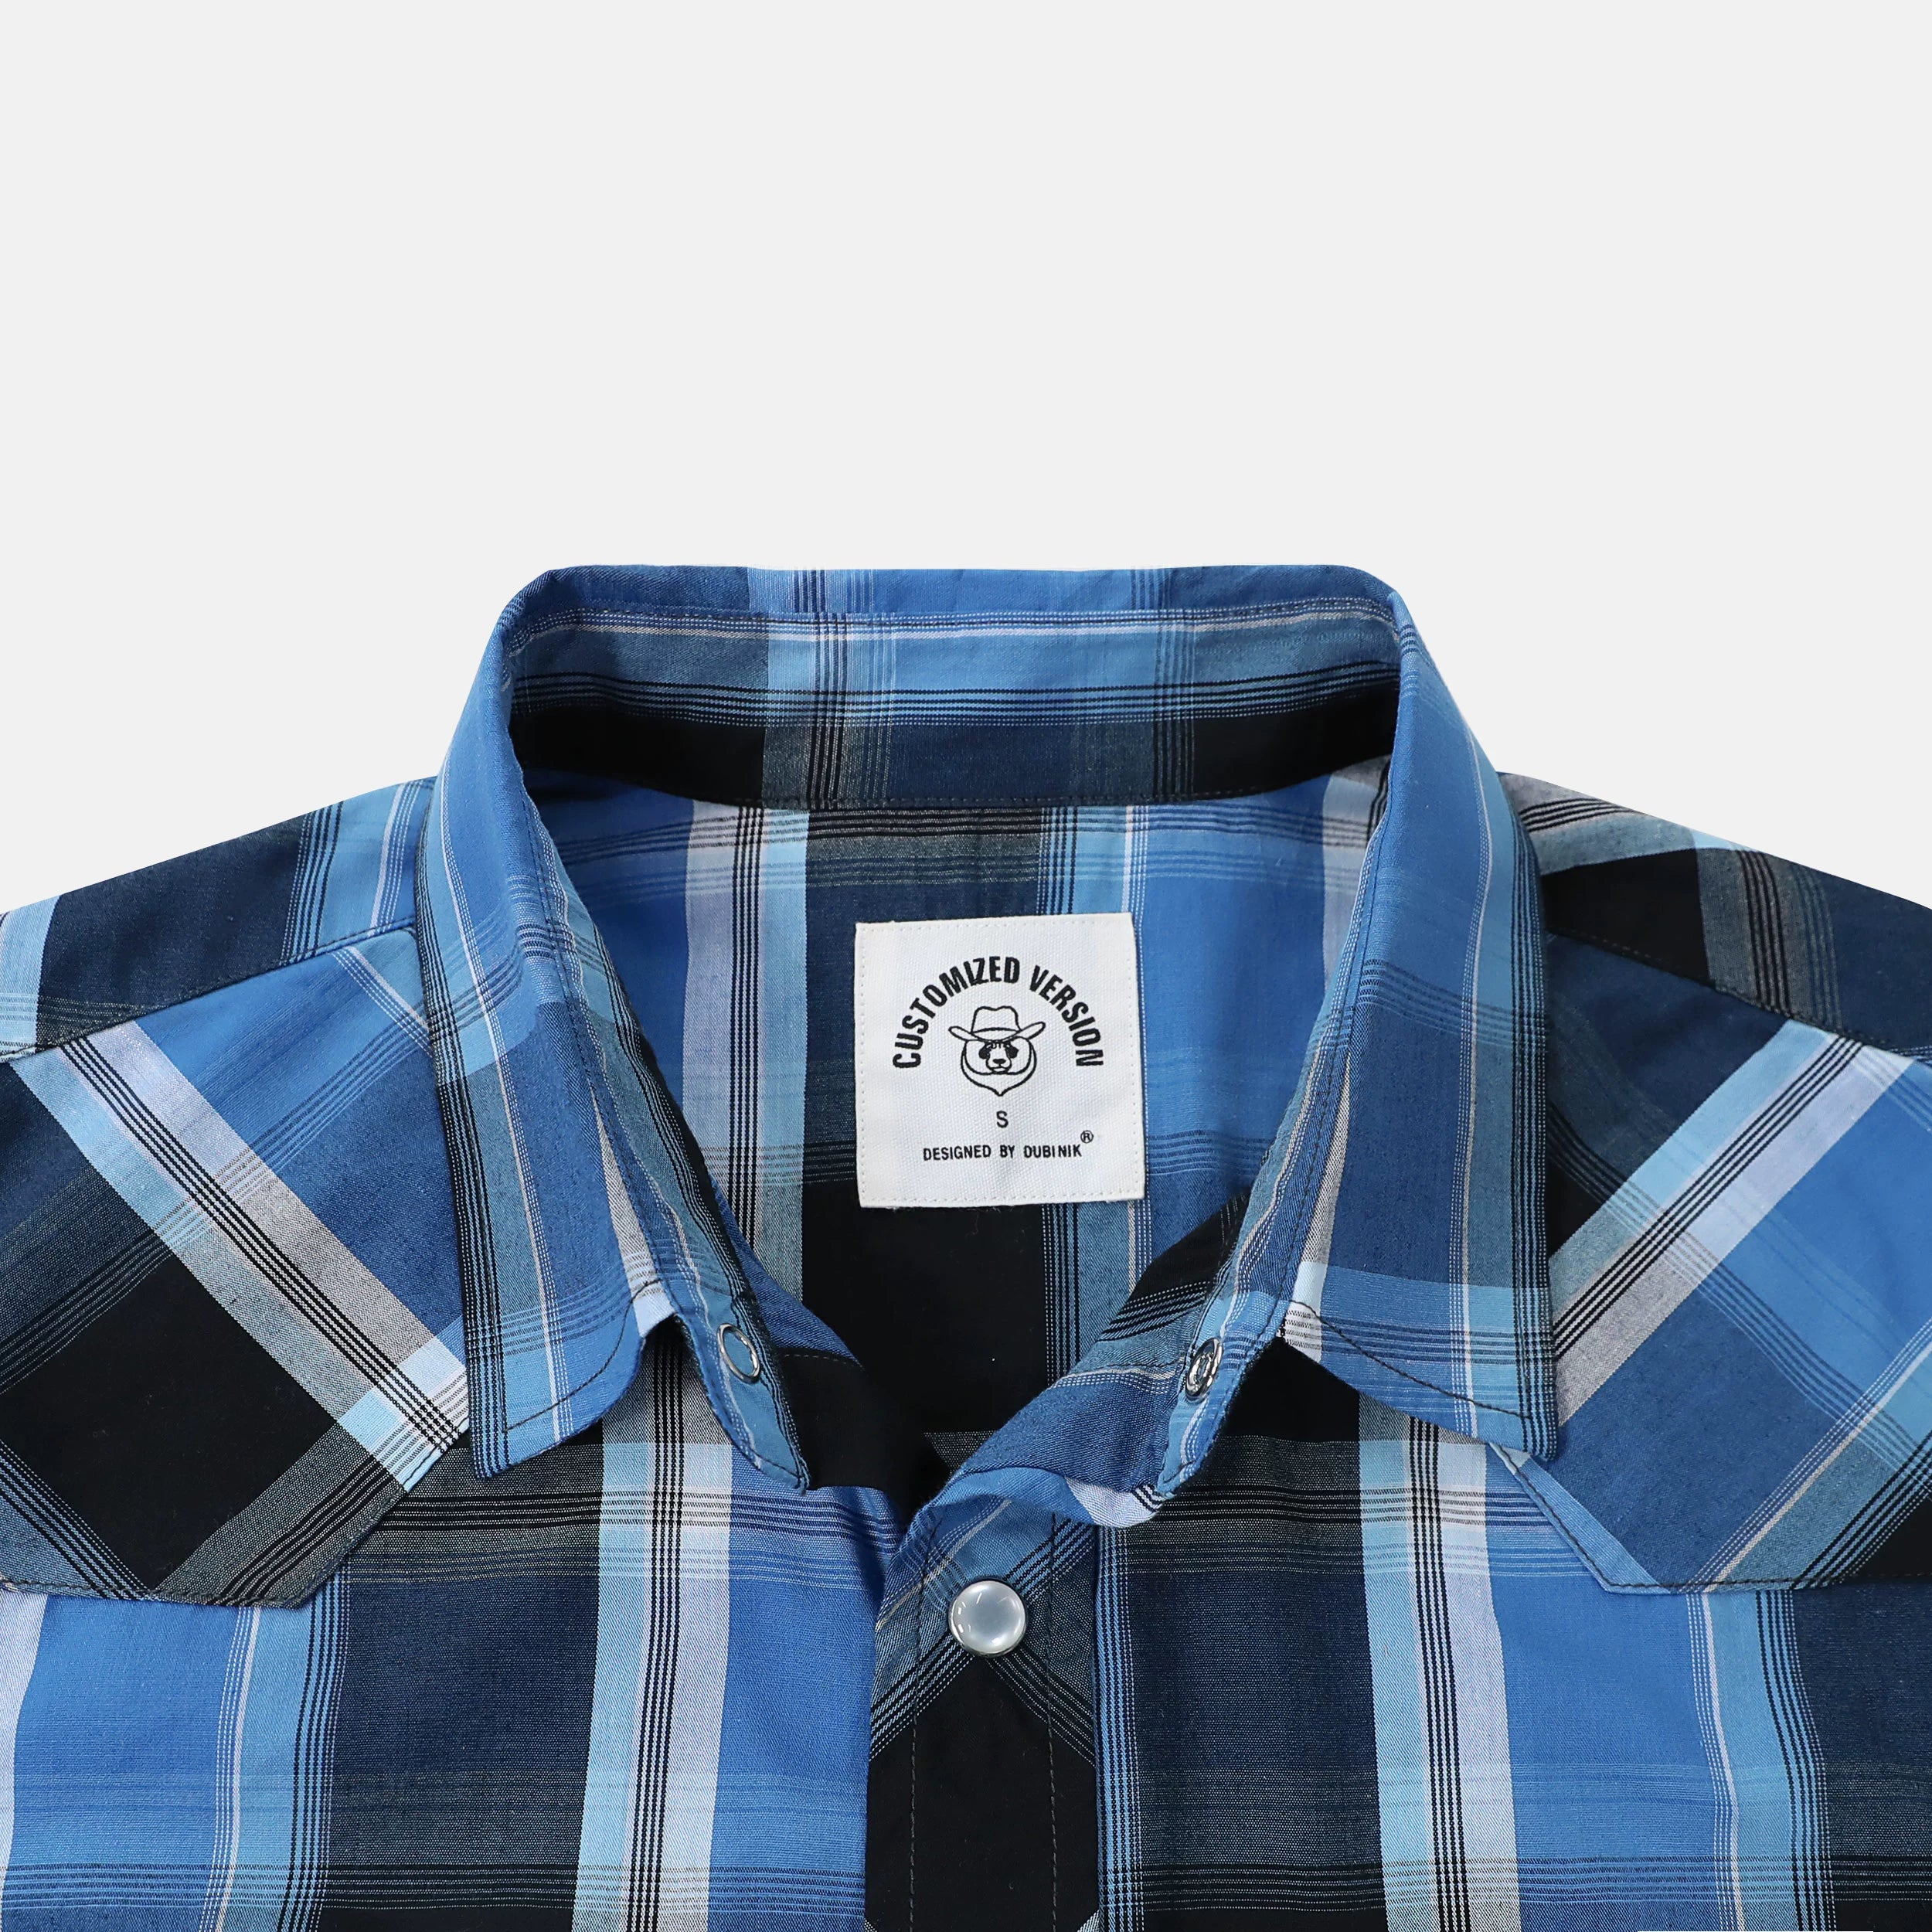 Dubinik® Western Shirts for Men Short Sleeve Plaid Pearl Snap Shirts for Men Button Up Shirt Cowboy Casual Work Shirt#41019